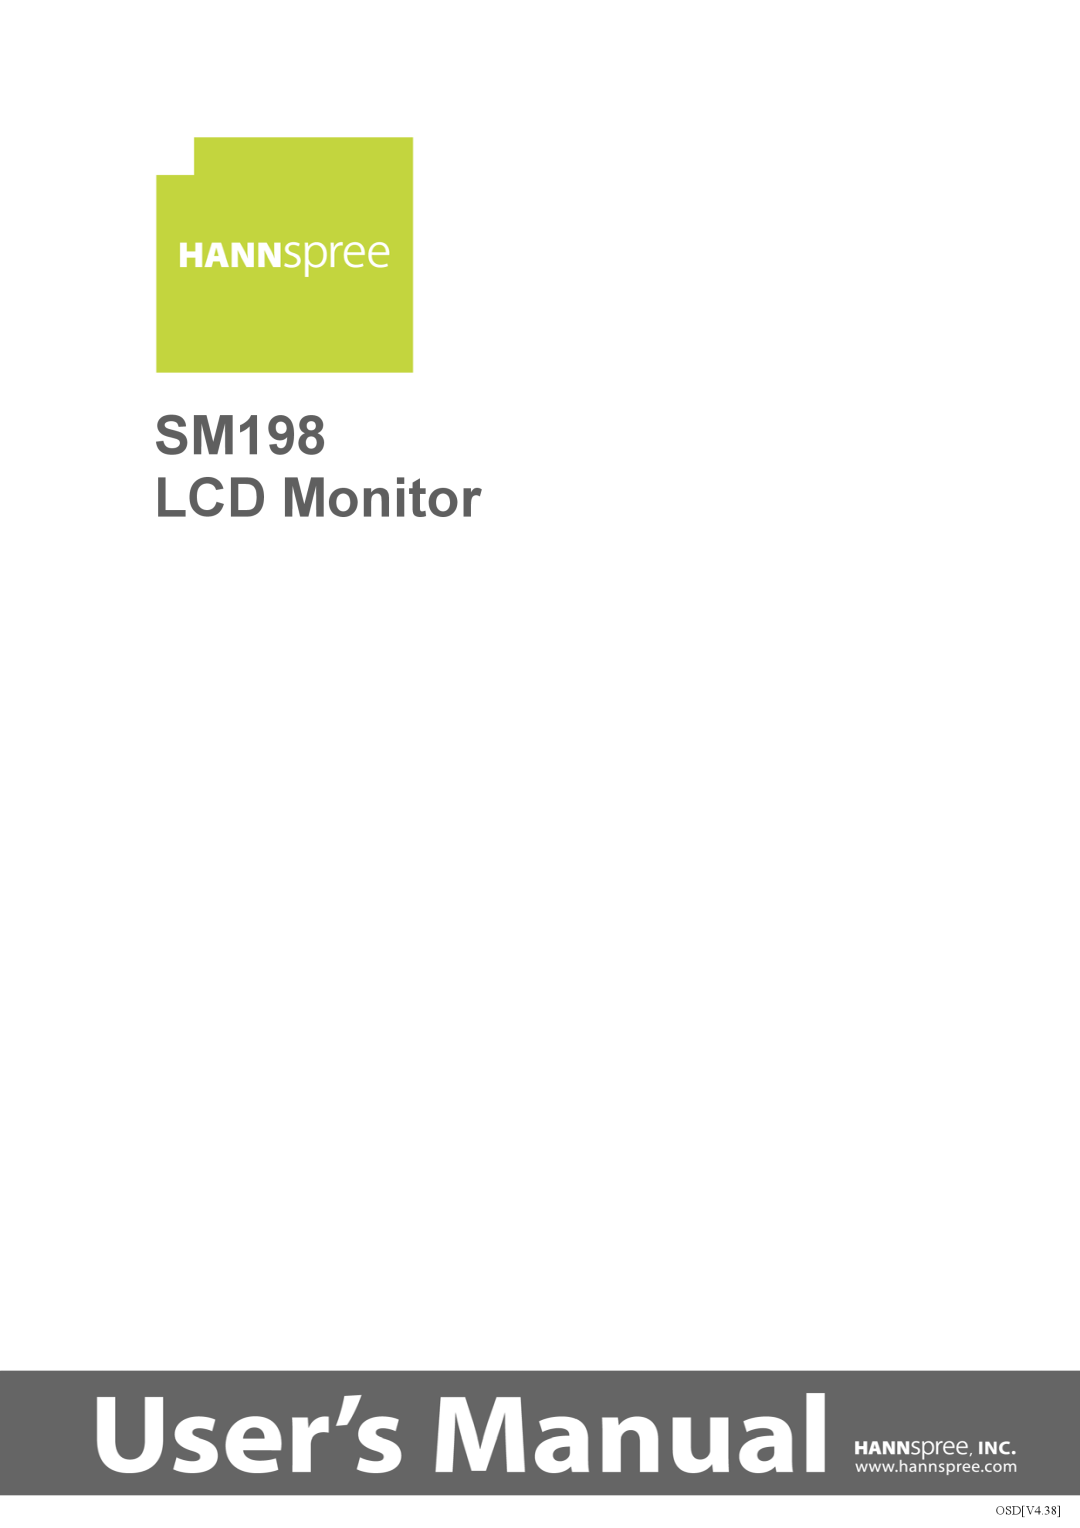 HANNspree manual SM198 LCD Monitor, OSDV4.38 